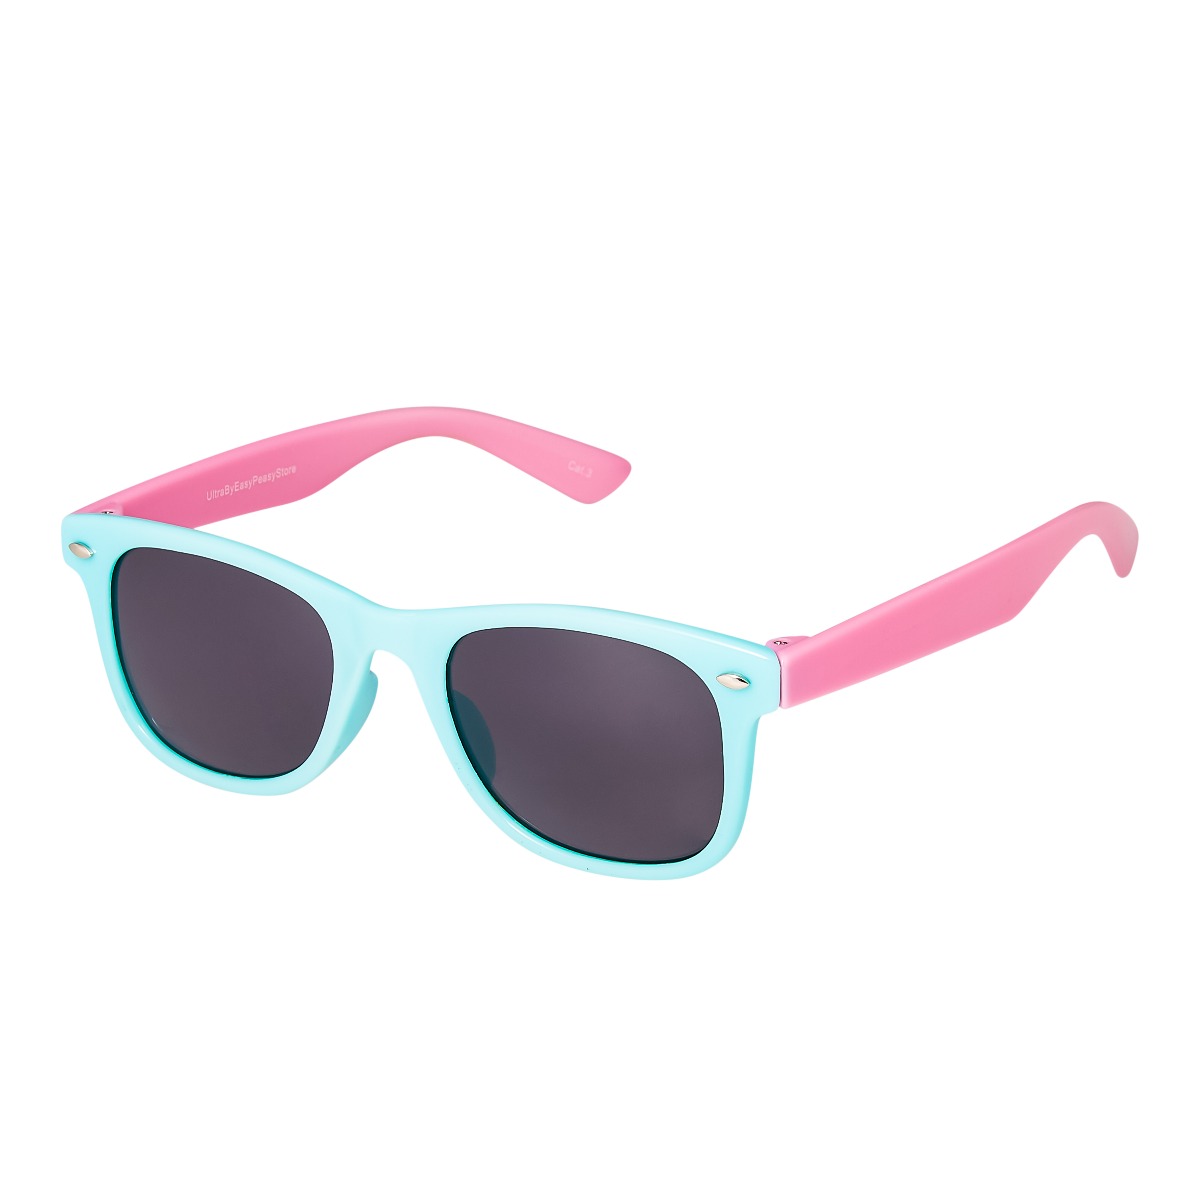 Kids Rubber Flexible Polarized Sunglasses With Strap 100% UVA & UVB 